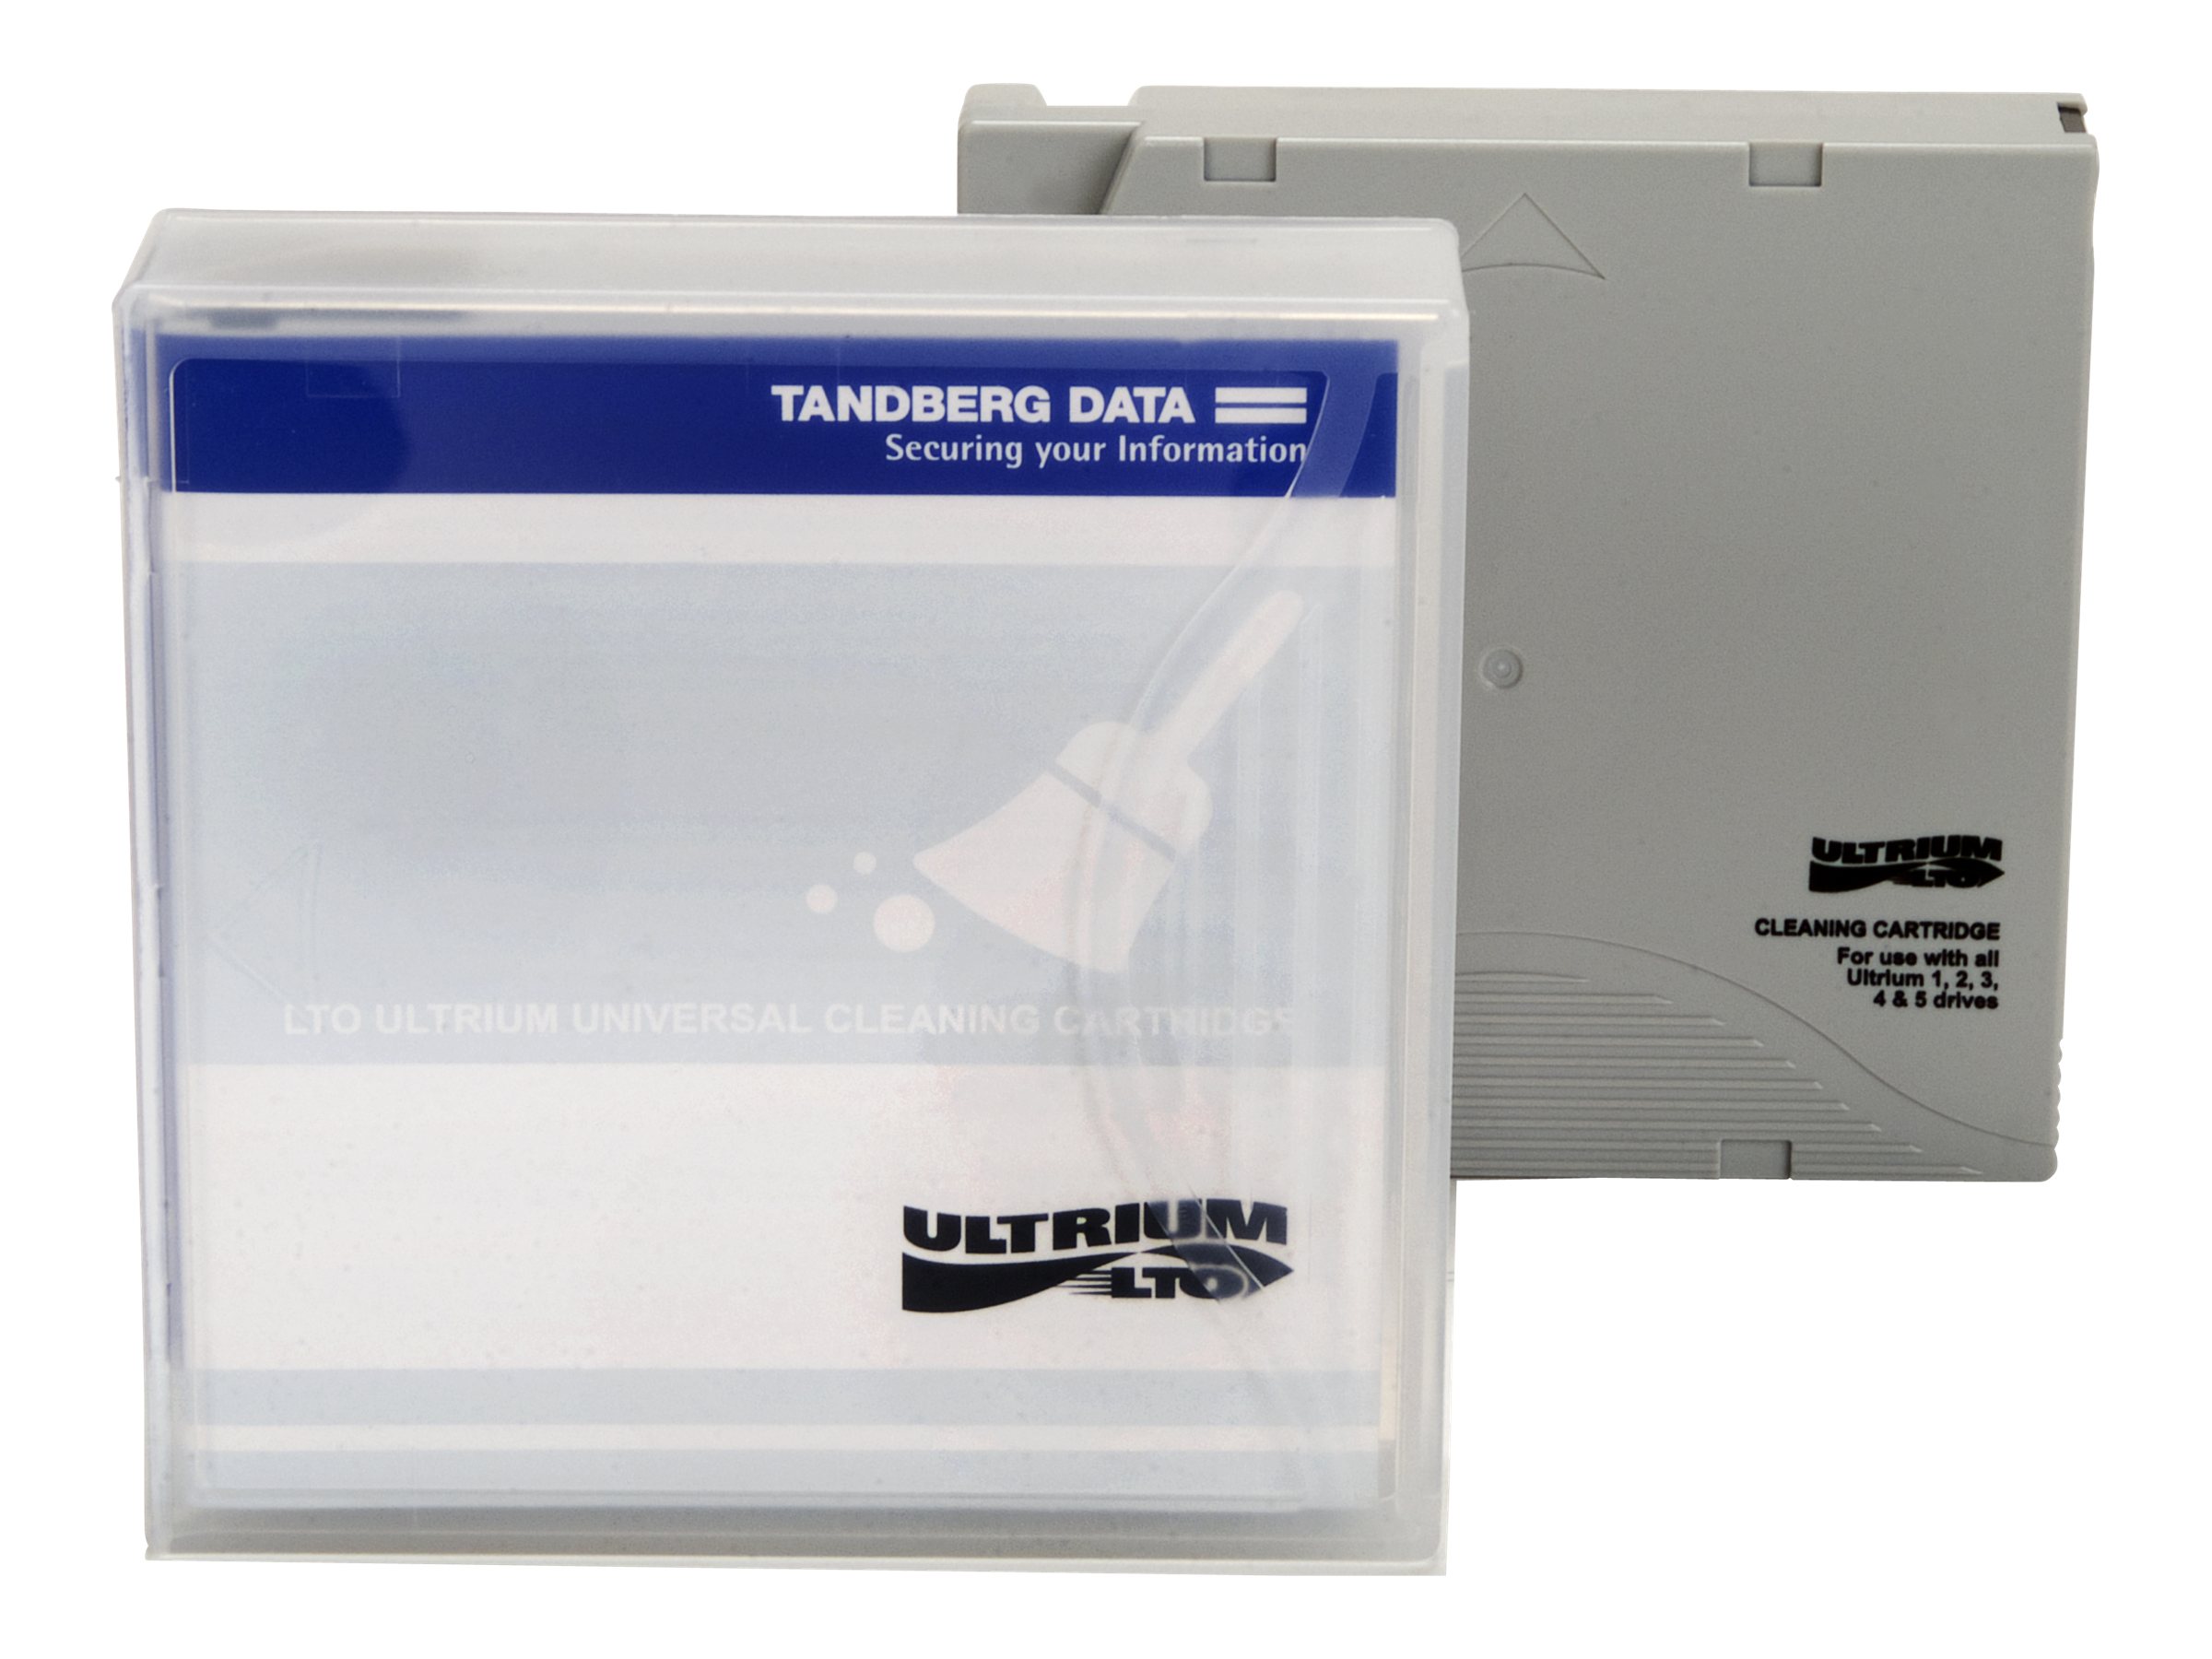 Overland Tandberg - LTO Ultrium - Reinigungskassette - für P/N: 2491-LTO, 2492-LTO, 3533-LTO, 3534-LTO, 3535-LTO, 3536-LTO, 8180-LTO, 871199, 871200